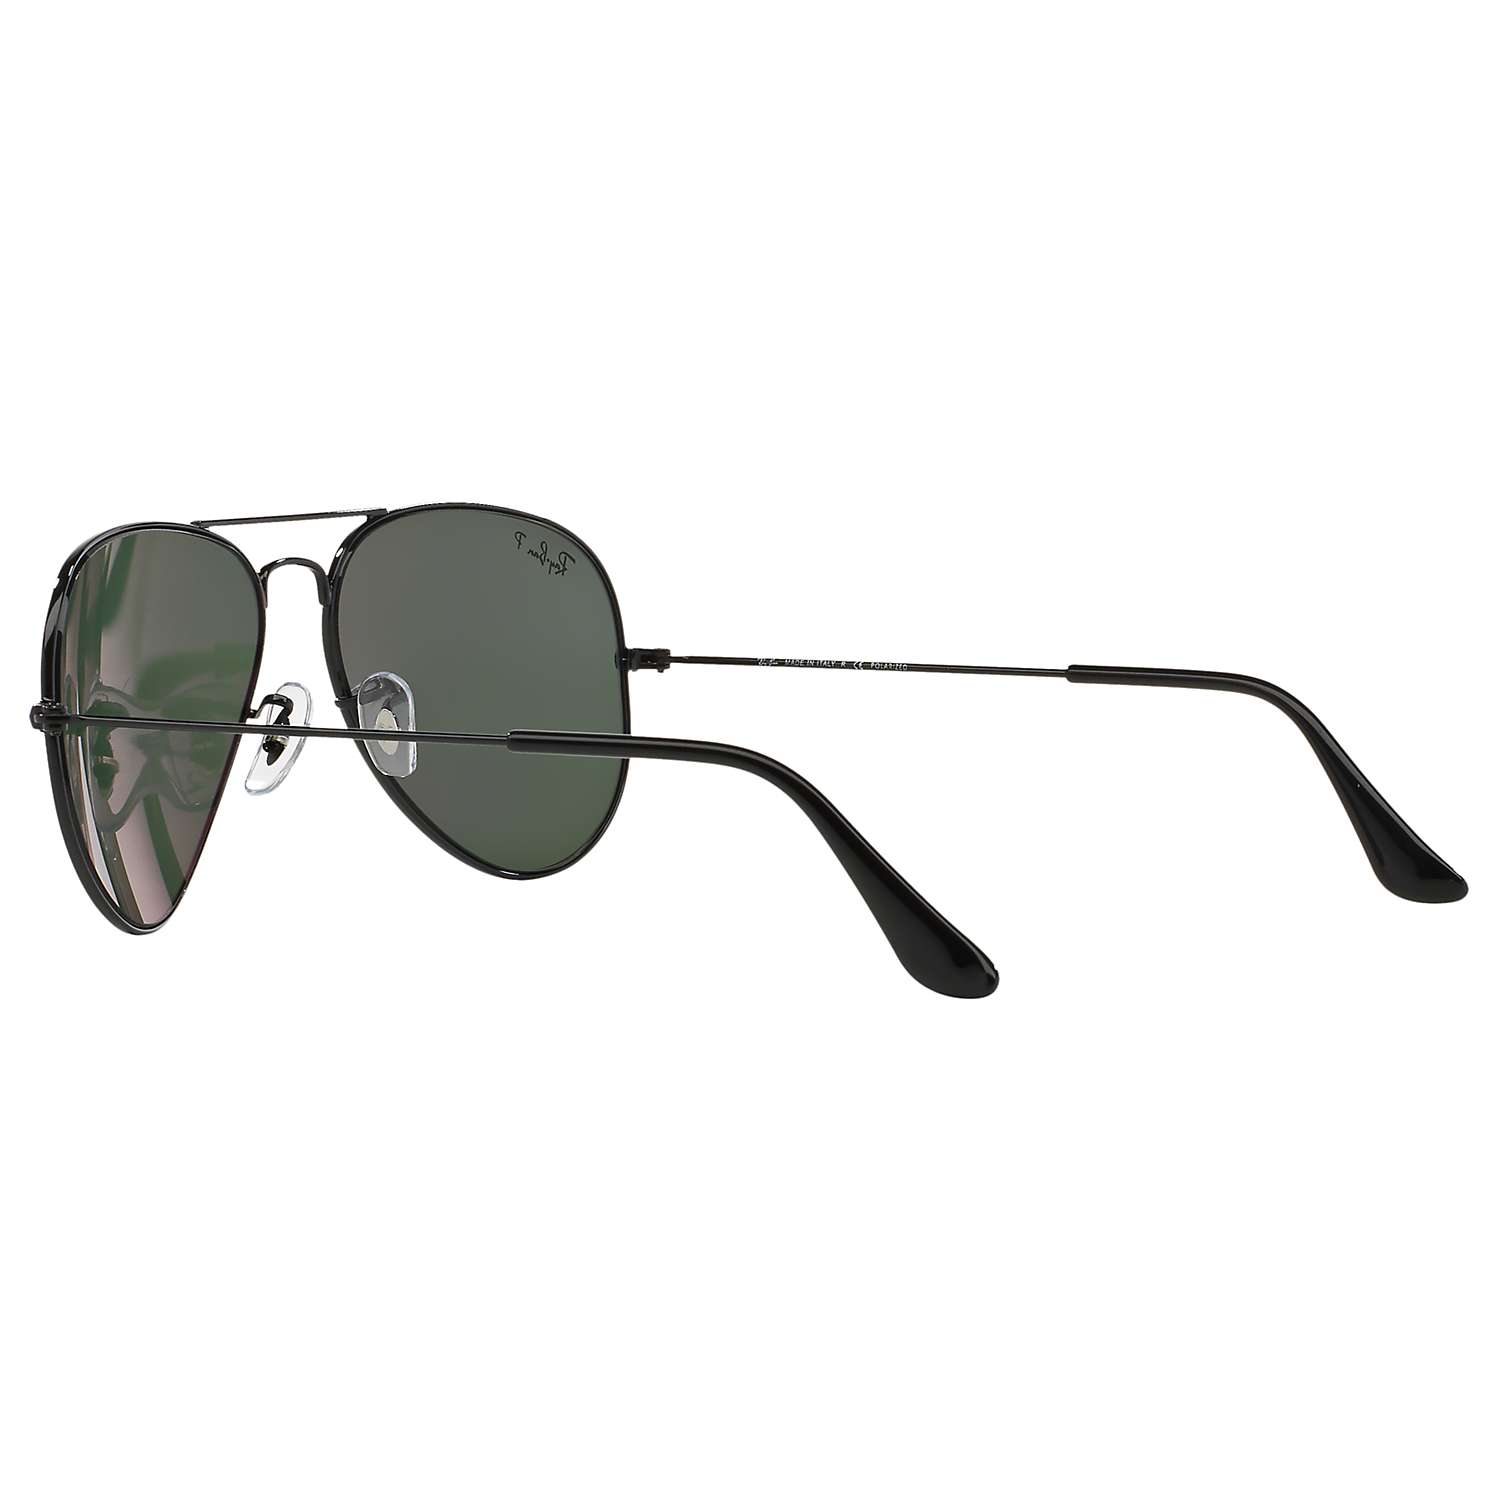 Buy Ray-Ban RB3025 Polarised Aviator Sunglasses, Black Online at johnlewis.com